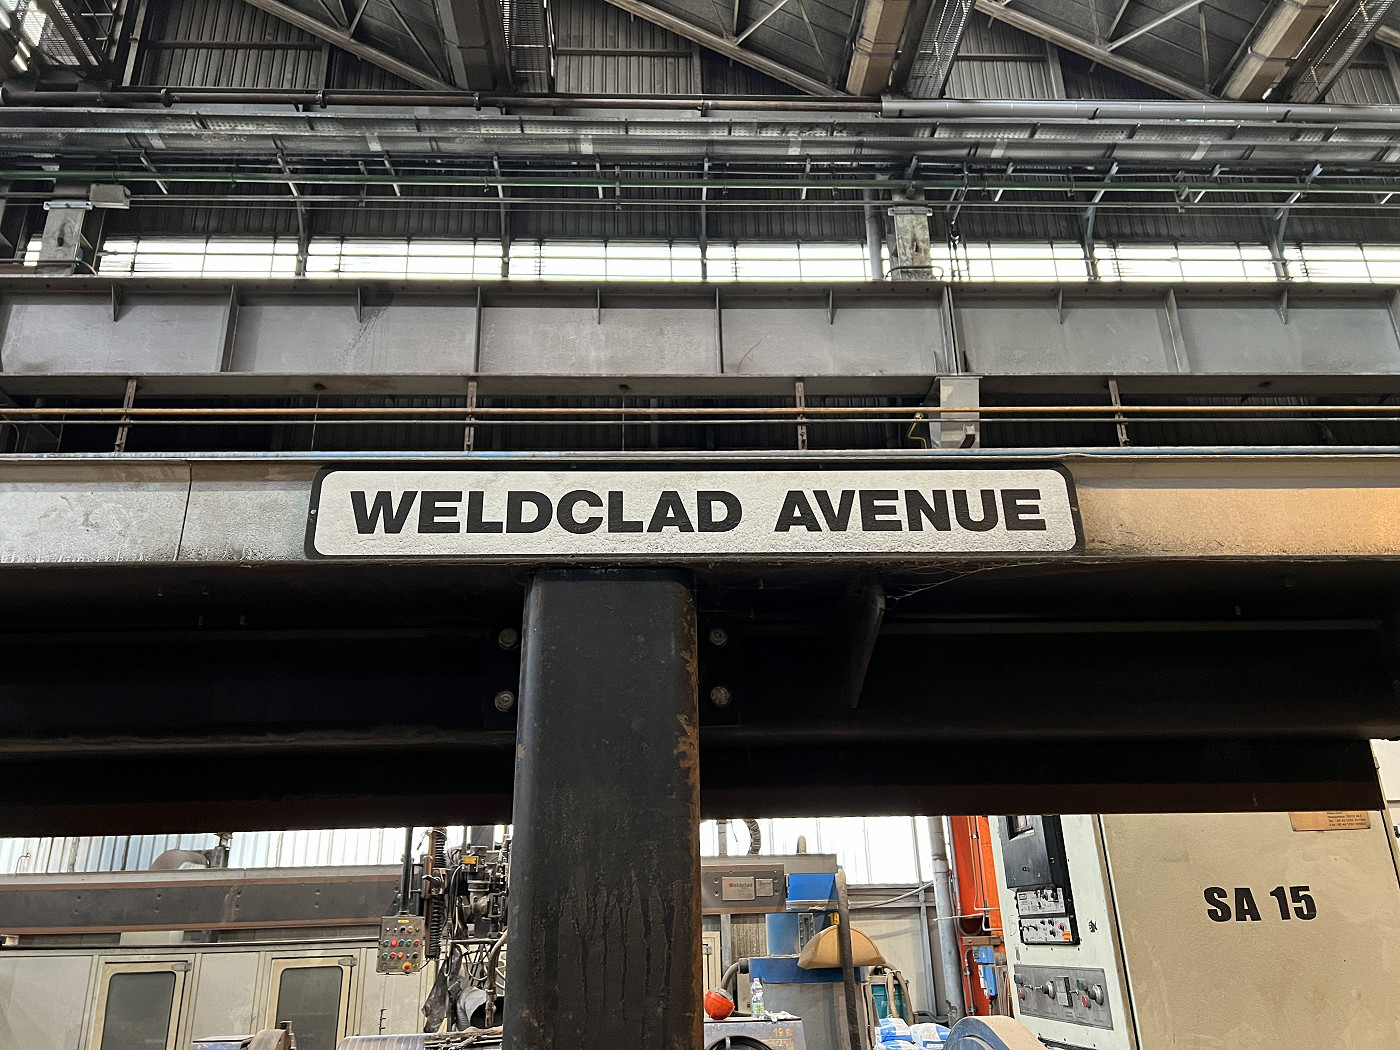 Weldclad Avenue